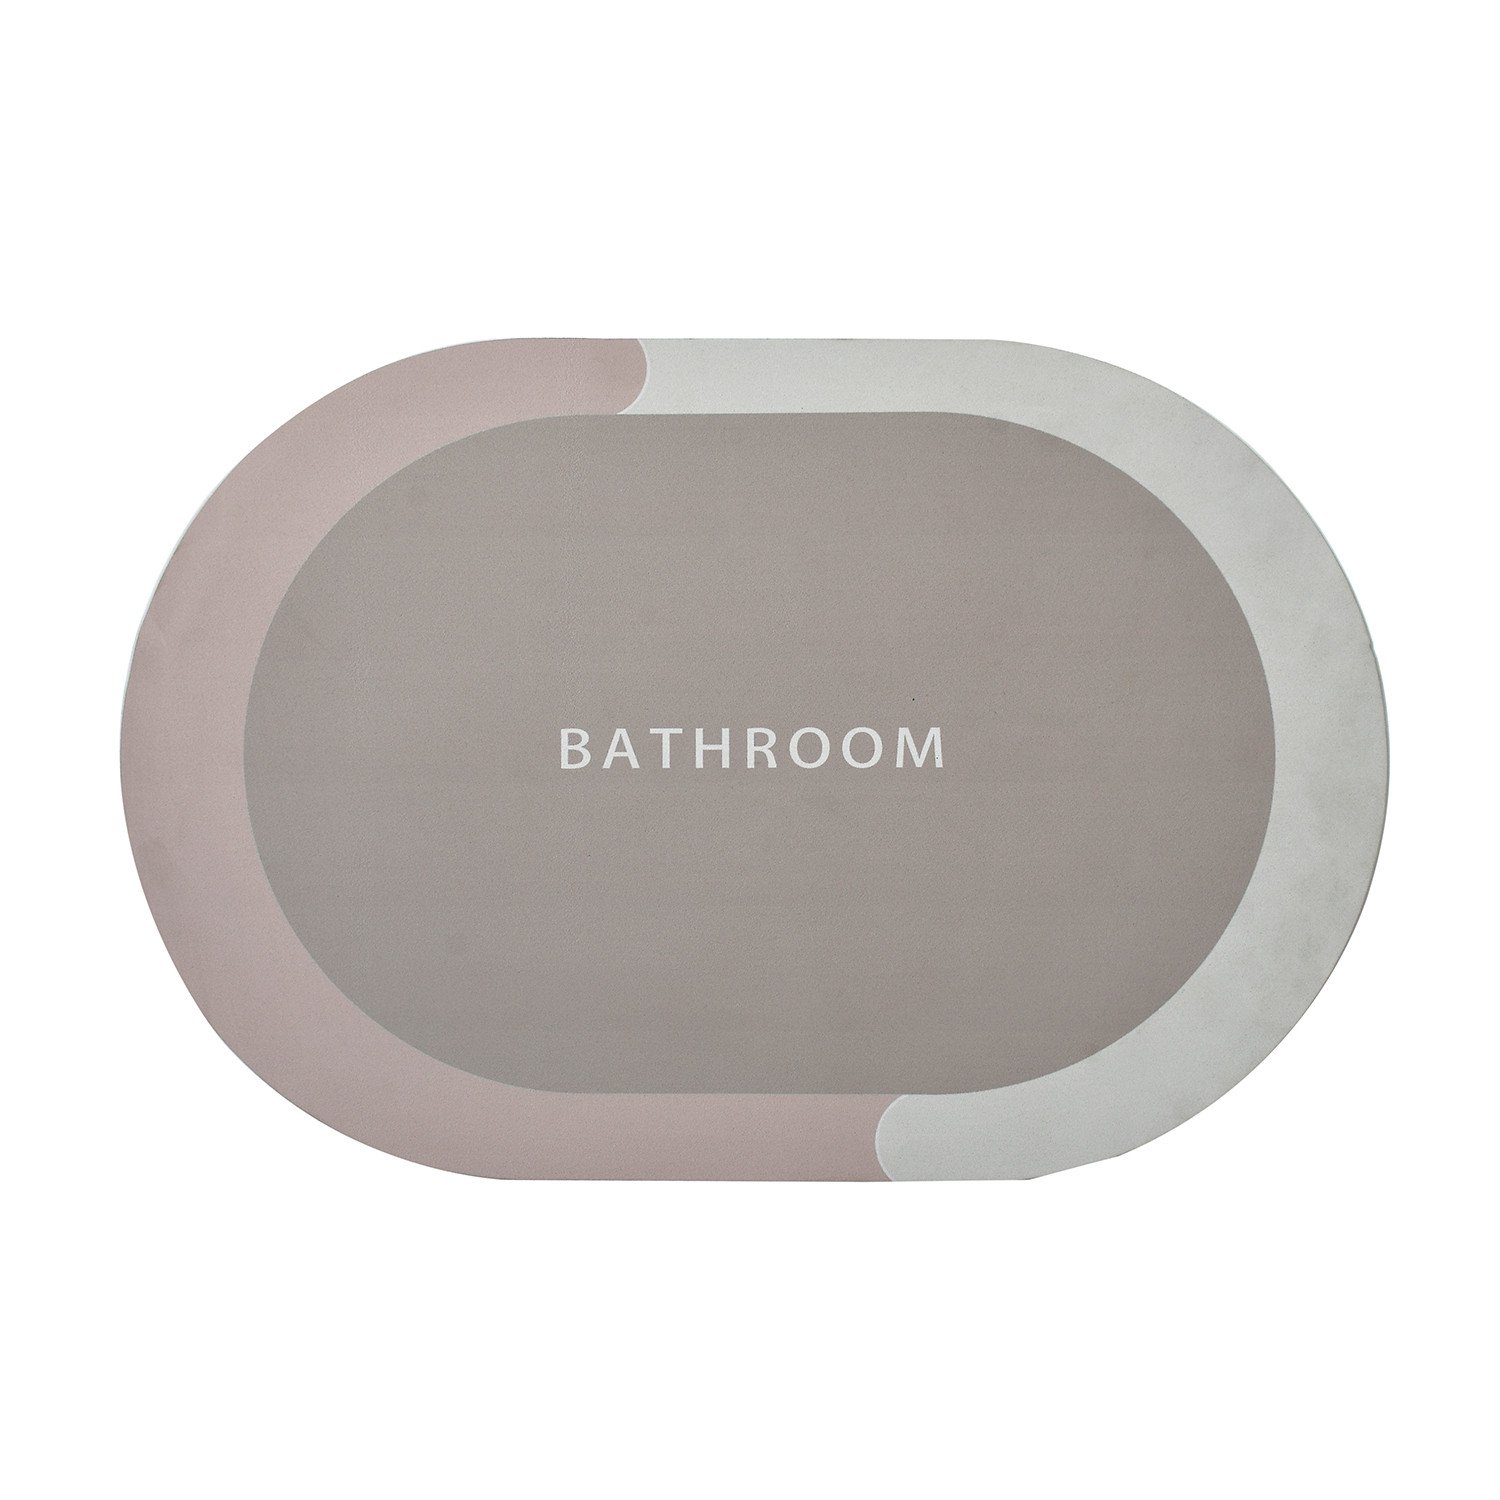 Kuber Industries Bathroom mat|Bathroom mat Super Absorbent Floor mat|Anti-skid Bathroom mat|Memory Foam Bathroom Rug Mat (Beige)